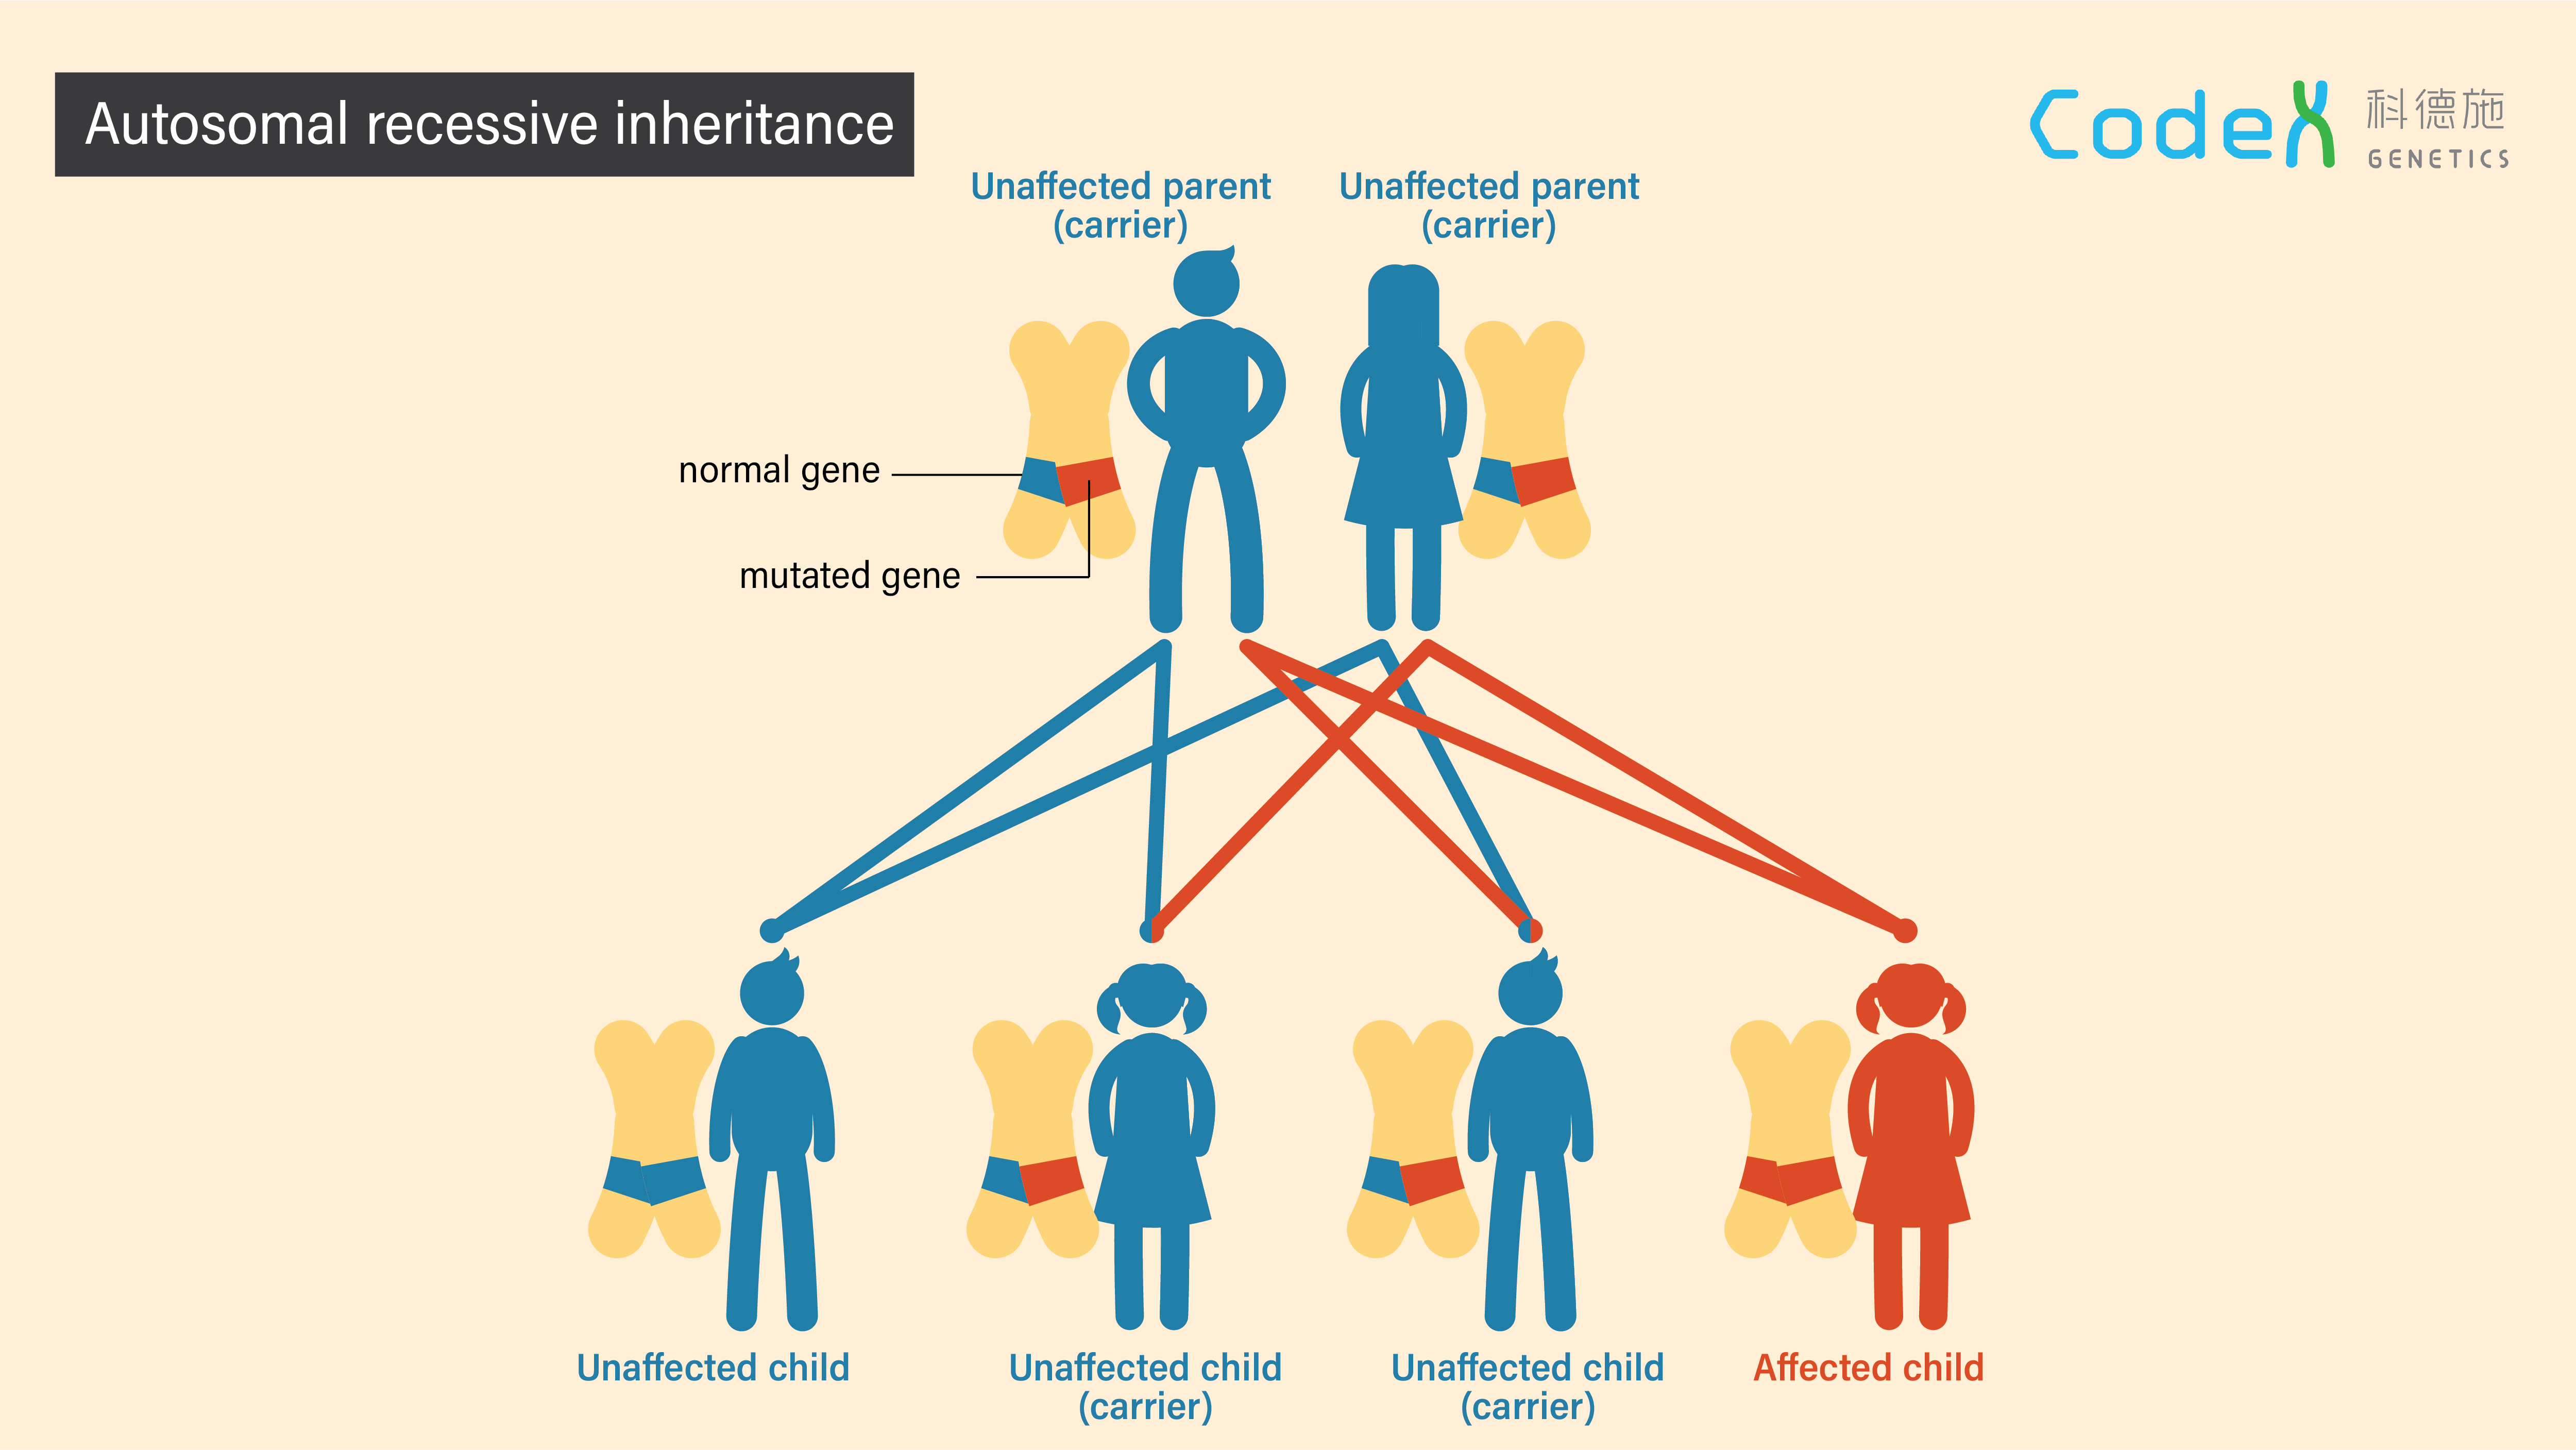 Autosomal recessive inheritance